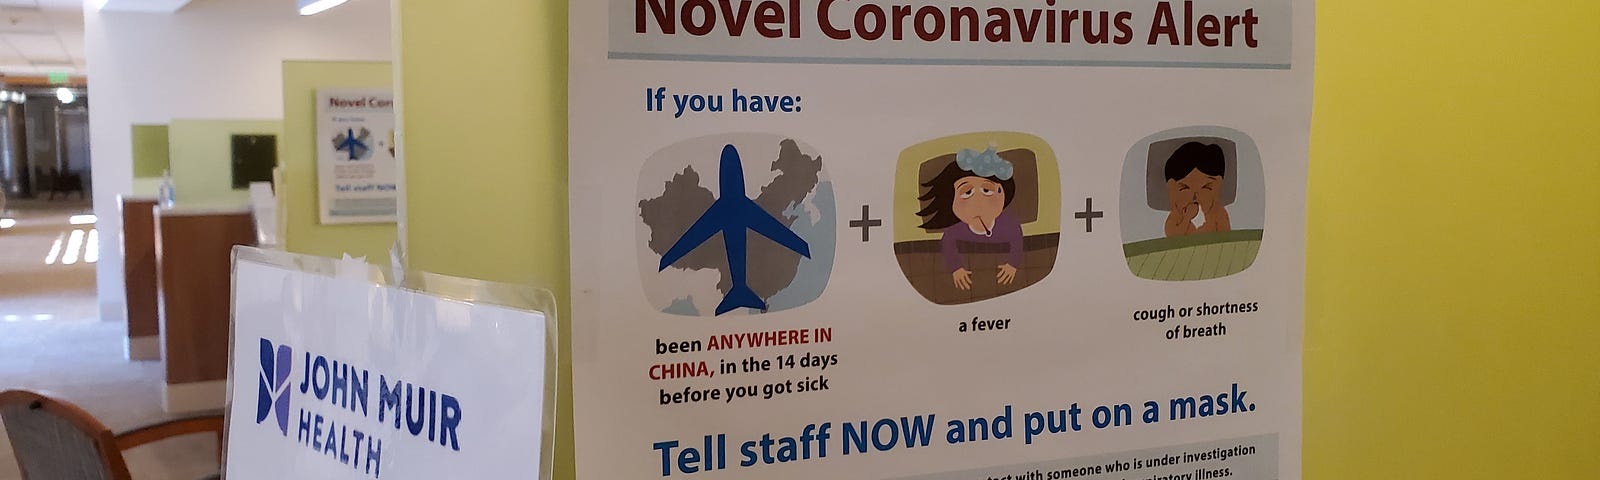 Warning sign with text reading “Novel Coronavirus Alert”, referring to quarantine and screening procedures.